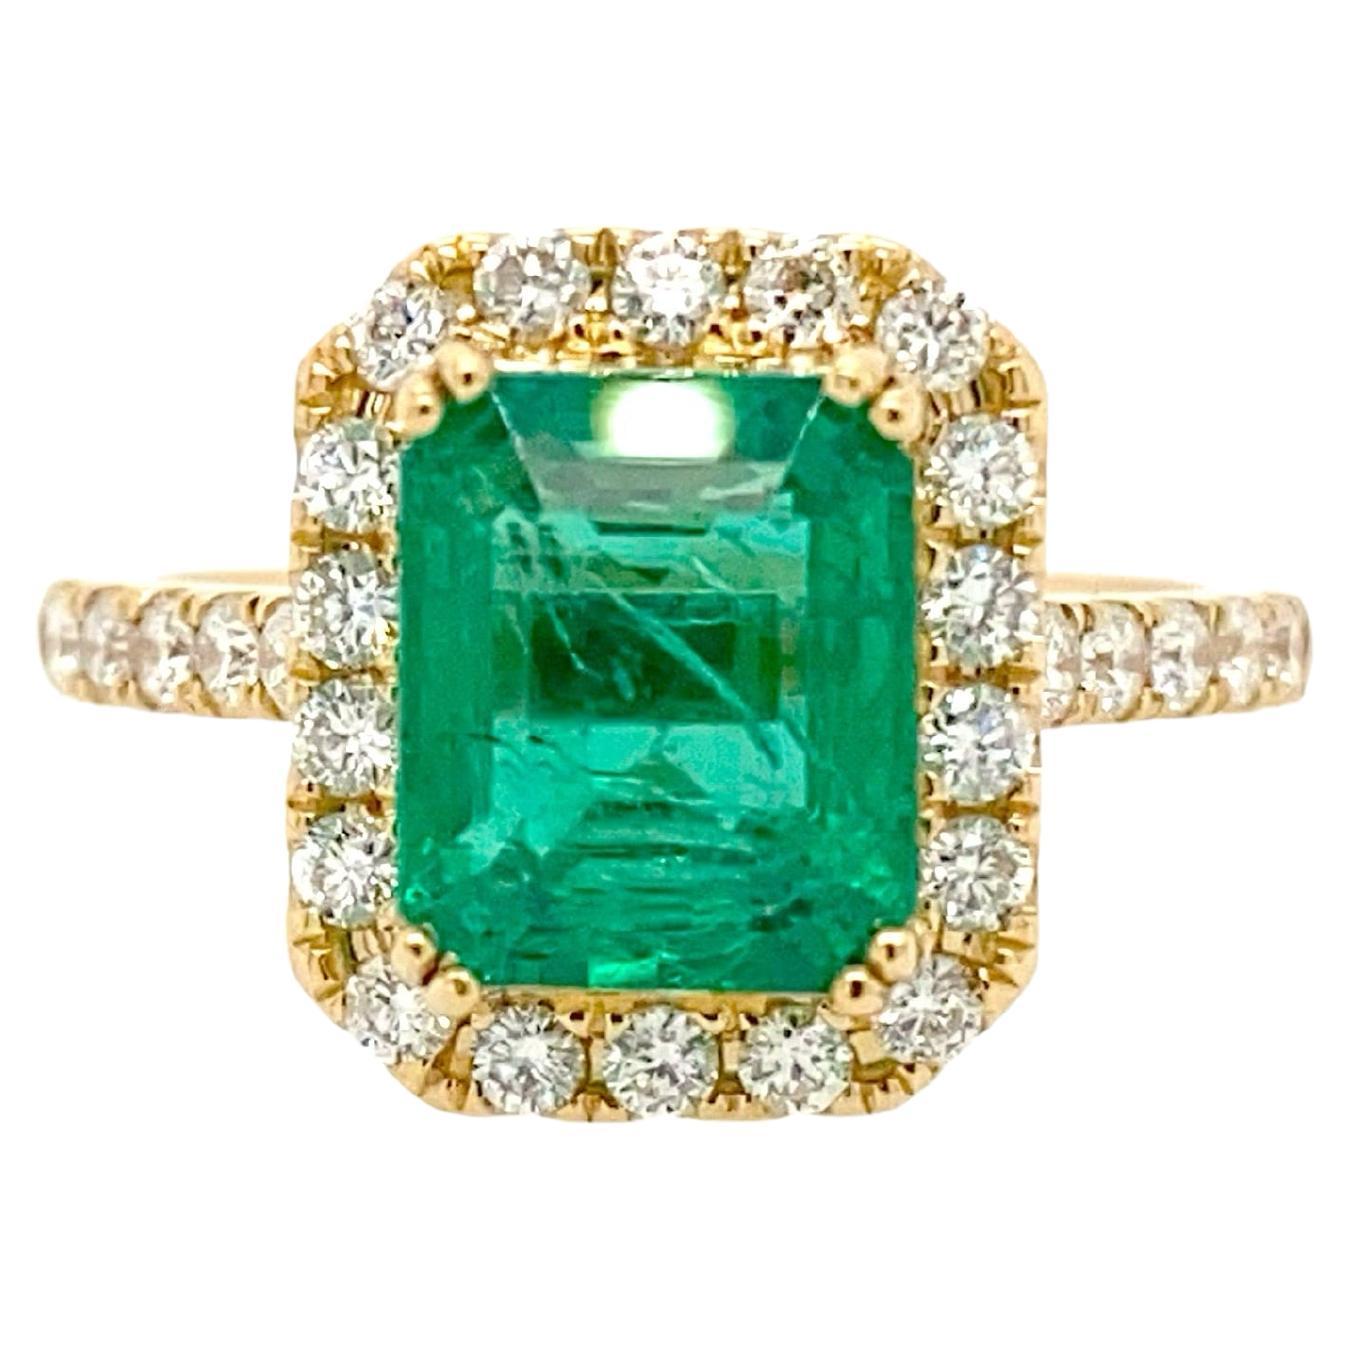 3 Carat Zambian Emerald And Diamond Halo Ring In 18k Yellow Gold